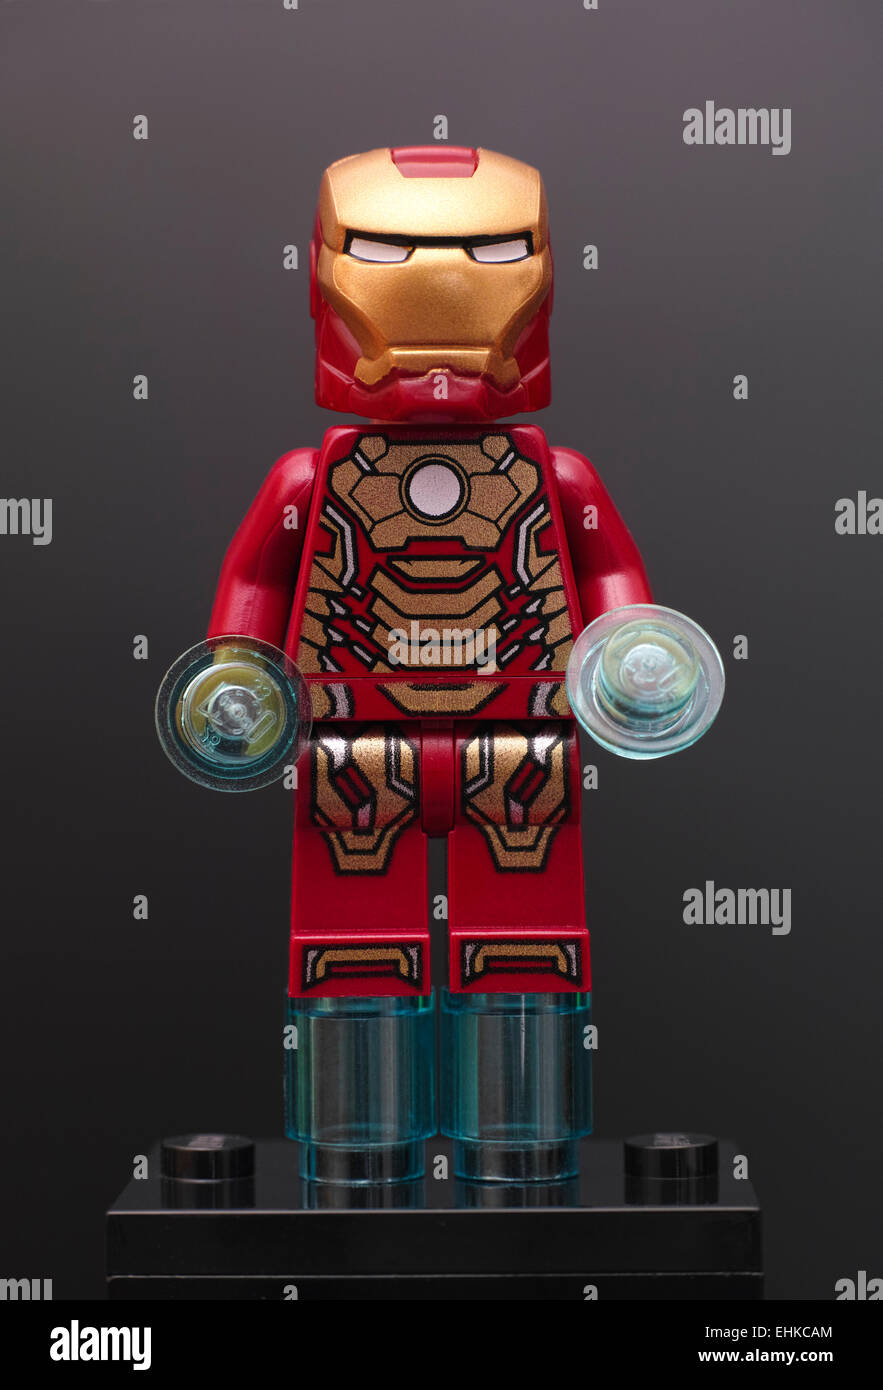 Tambov, Russian Federation - February 22, 2015 Lego Iron Man minifigure on black background. Studio shot. Stock Photo